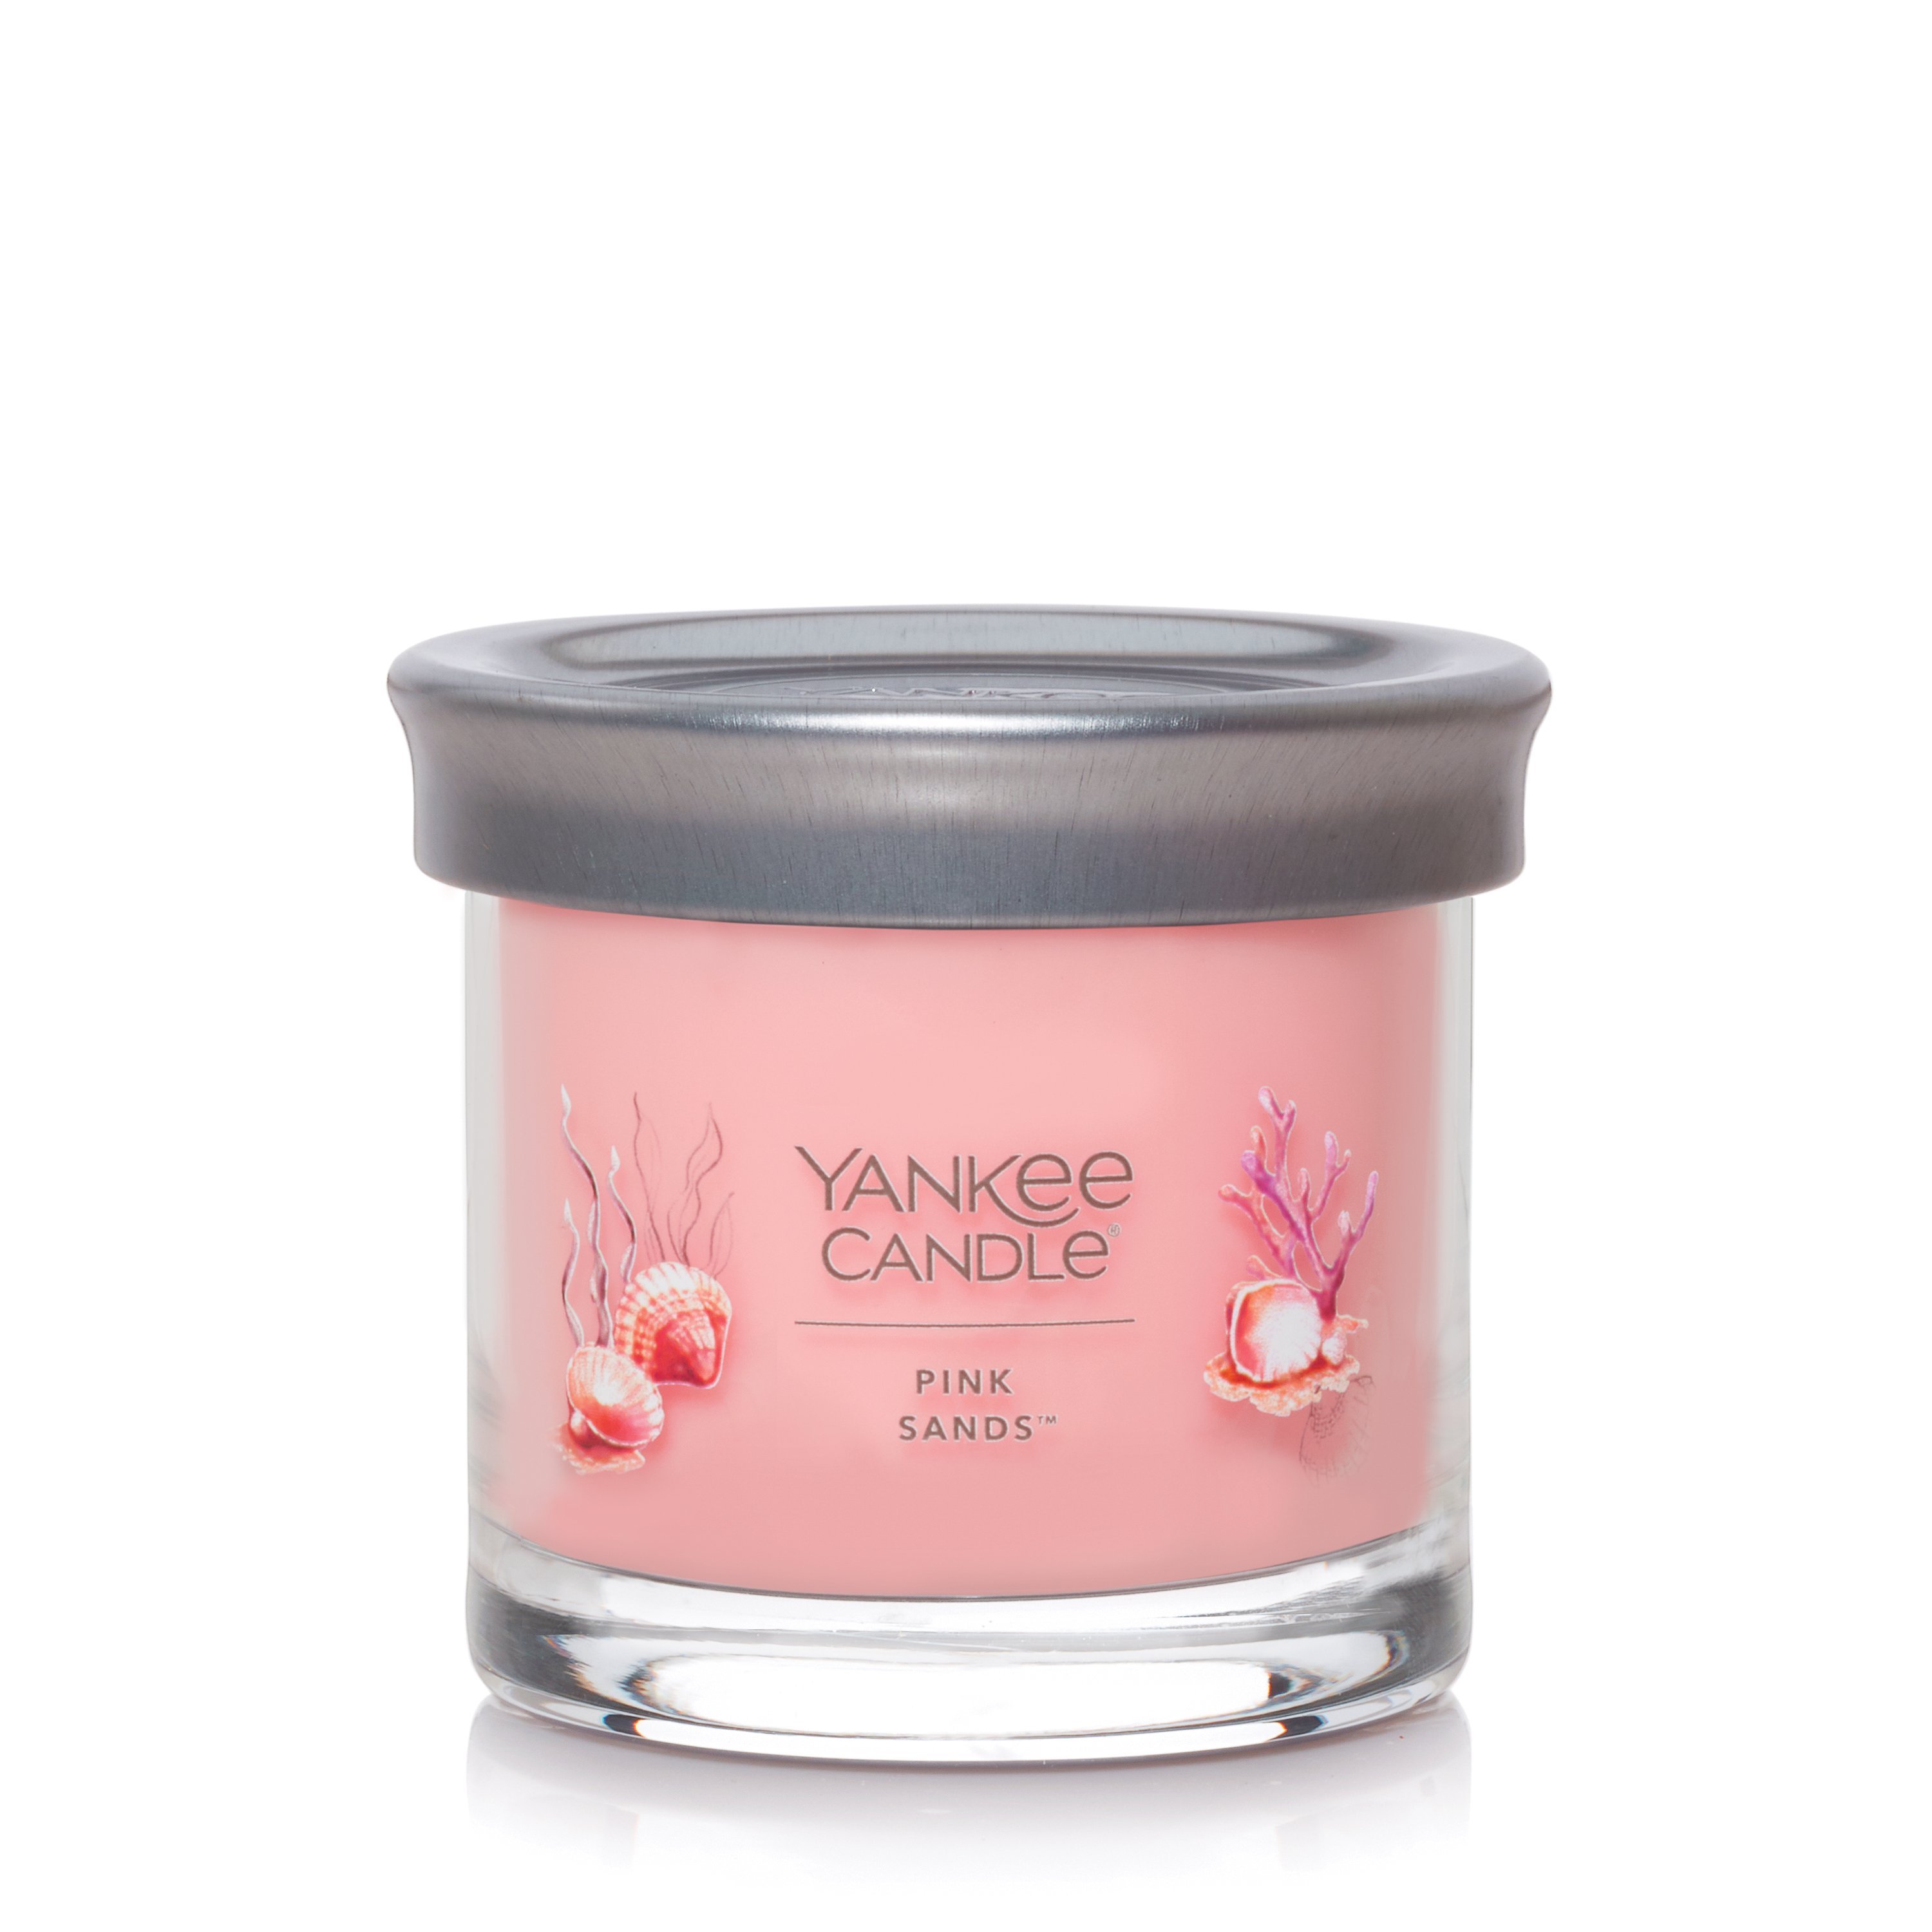 Yankee Candle Pink Sands Scent Jar Air Freshener 3 Pack